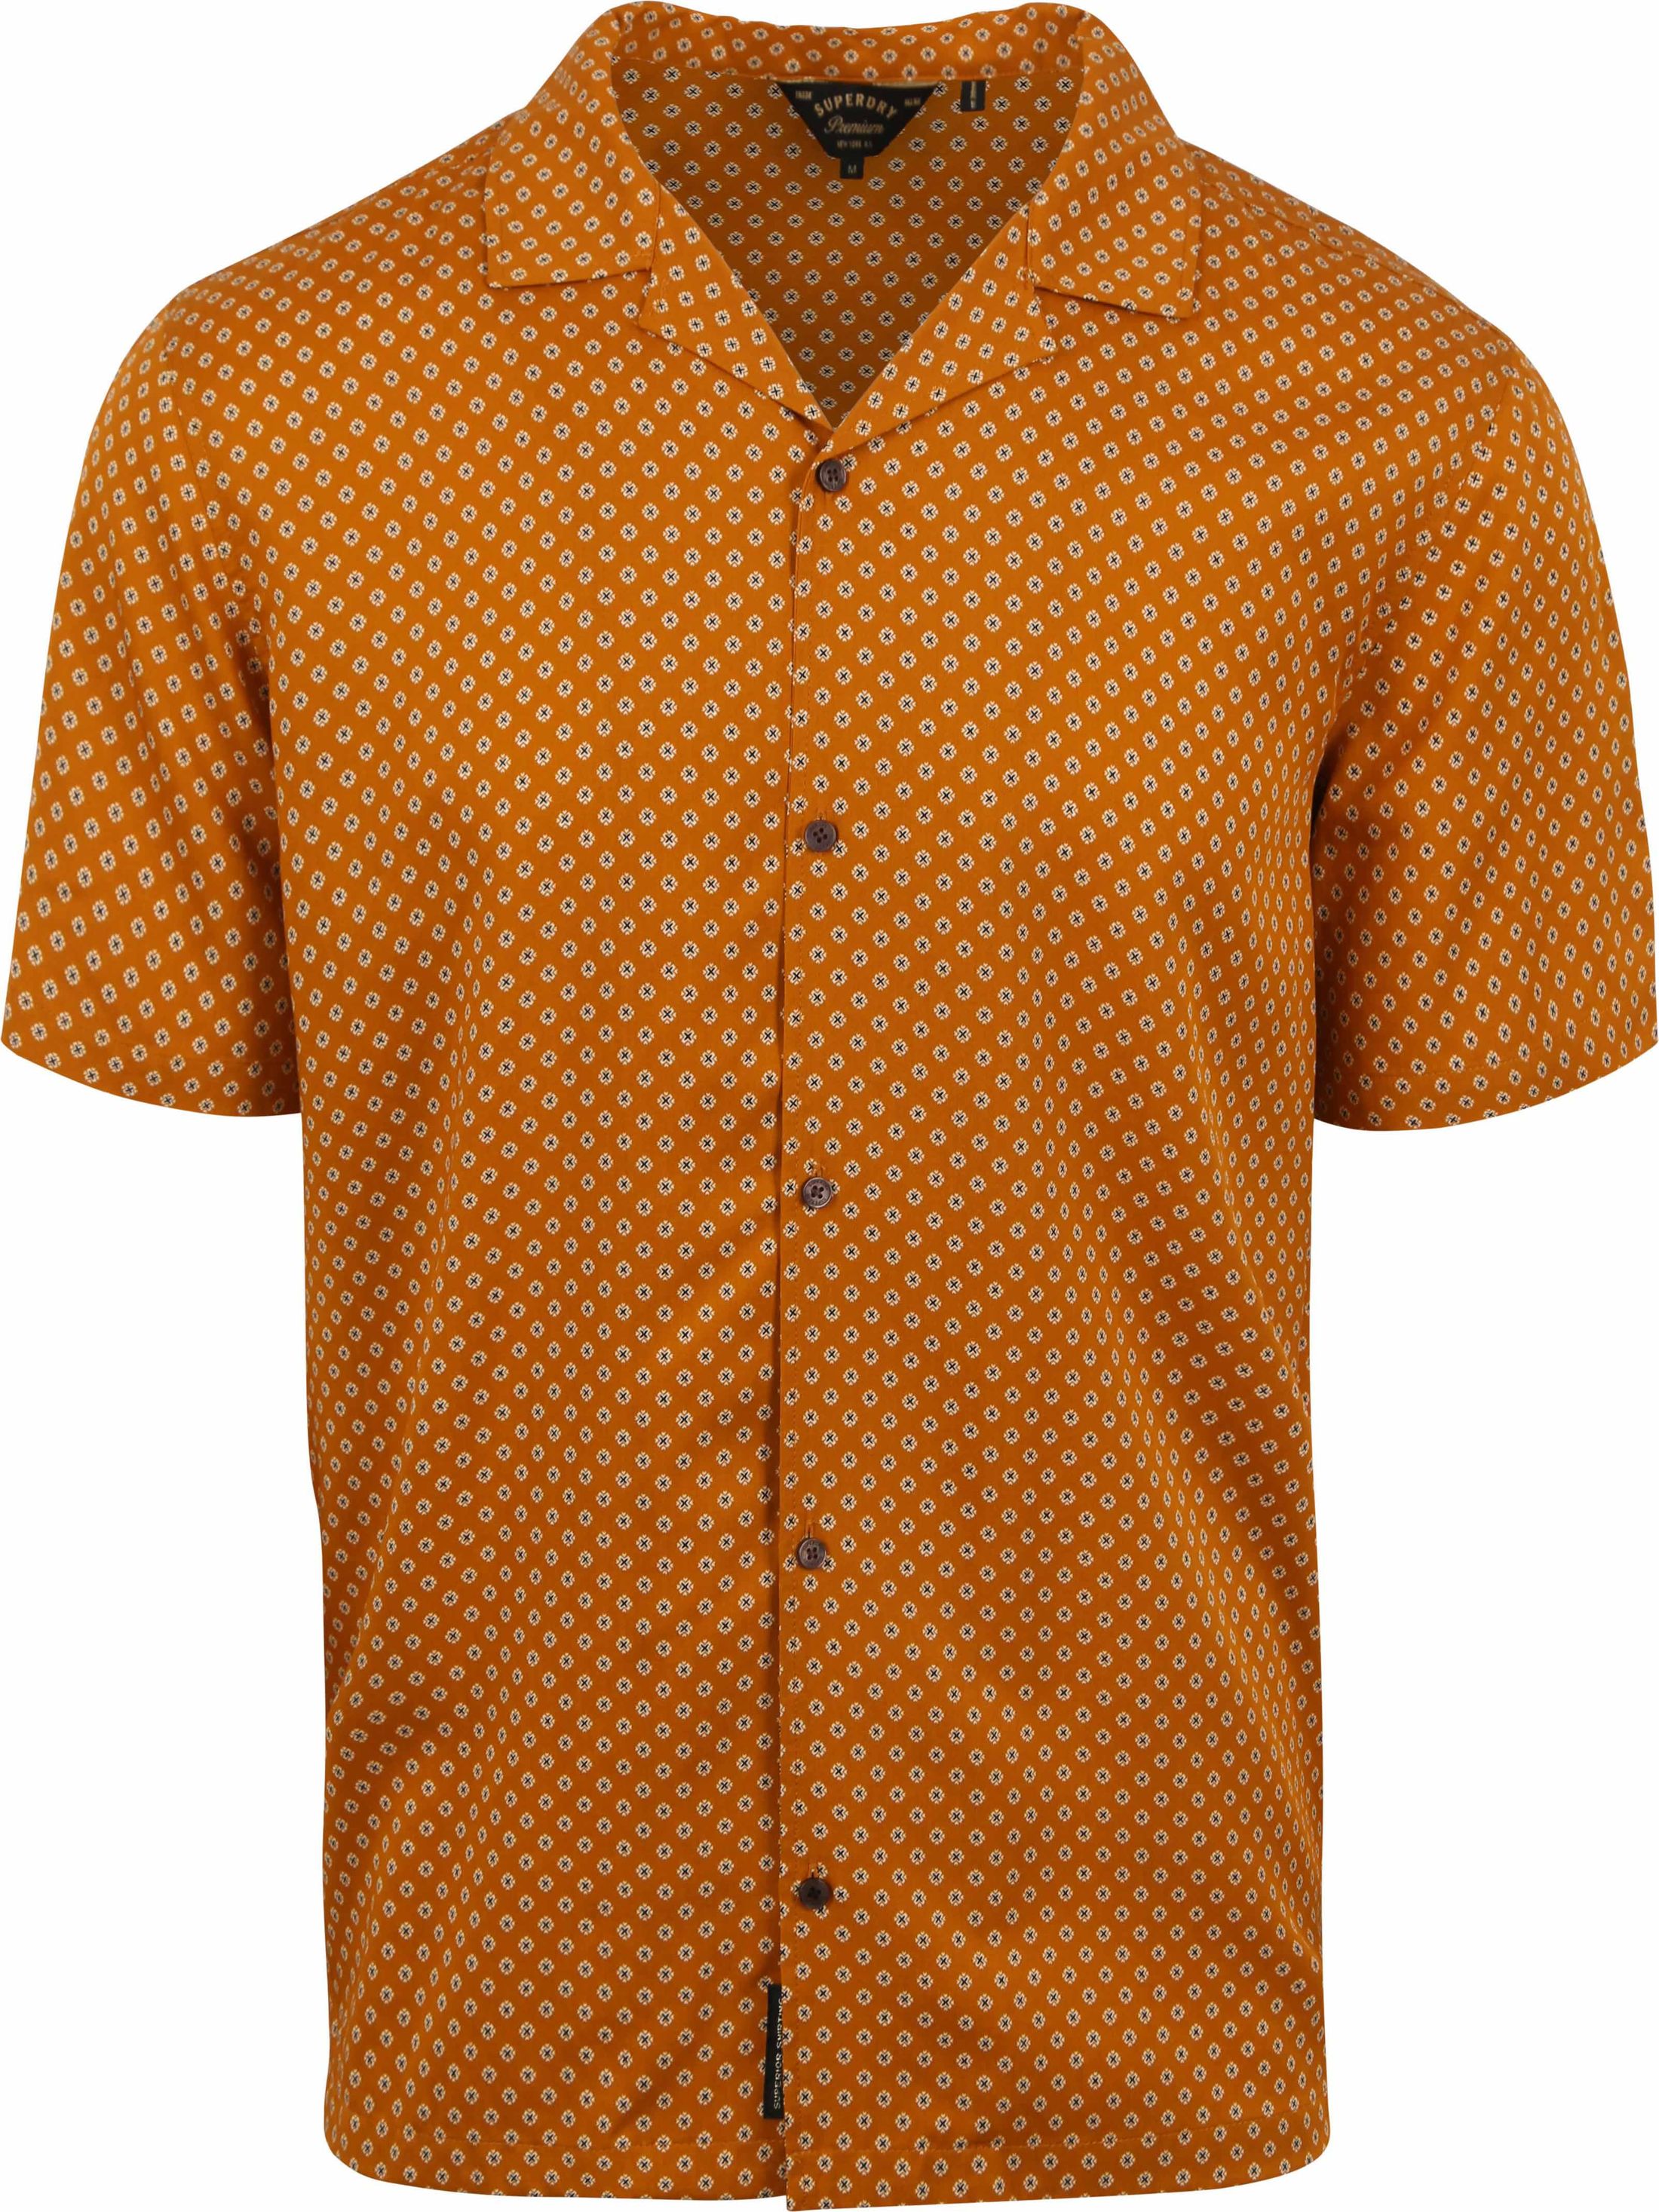 Superdry Overhemd Short sleeve Oranje Geo Tan Print